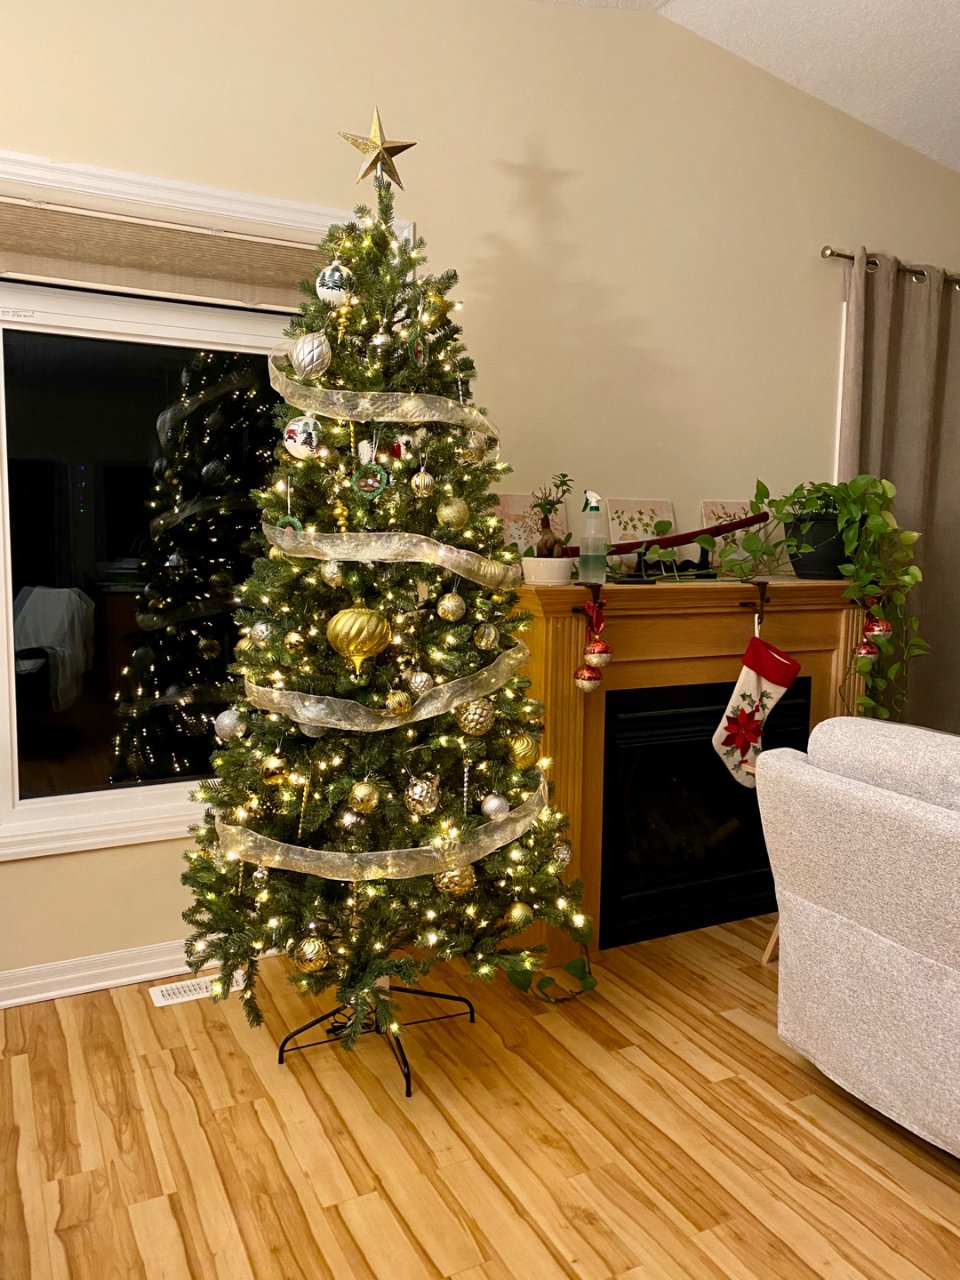 Lowe’s 圣诞树和装饰品清仓...